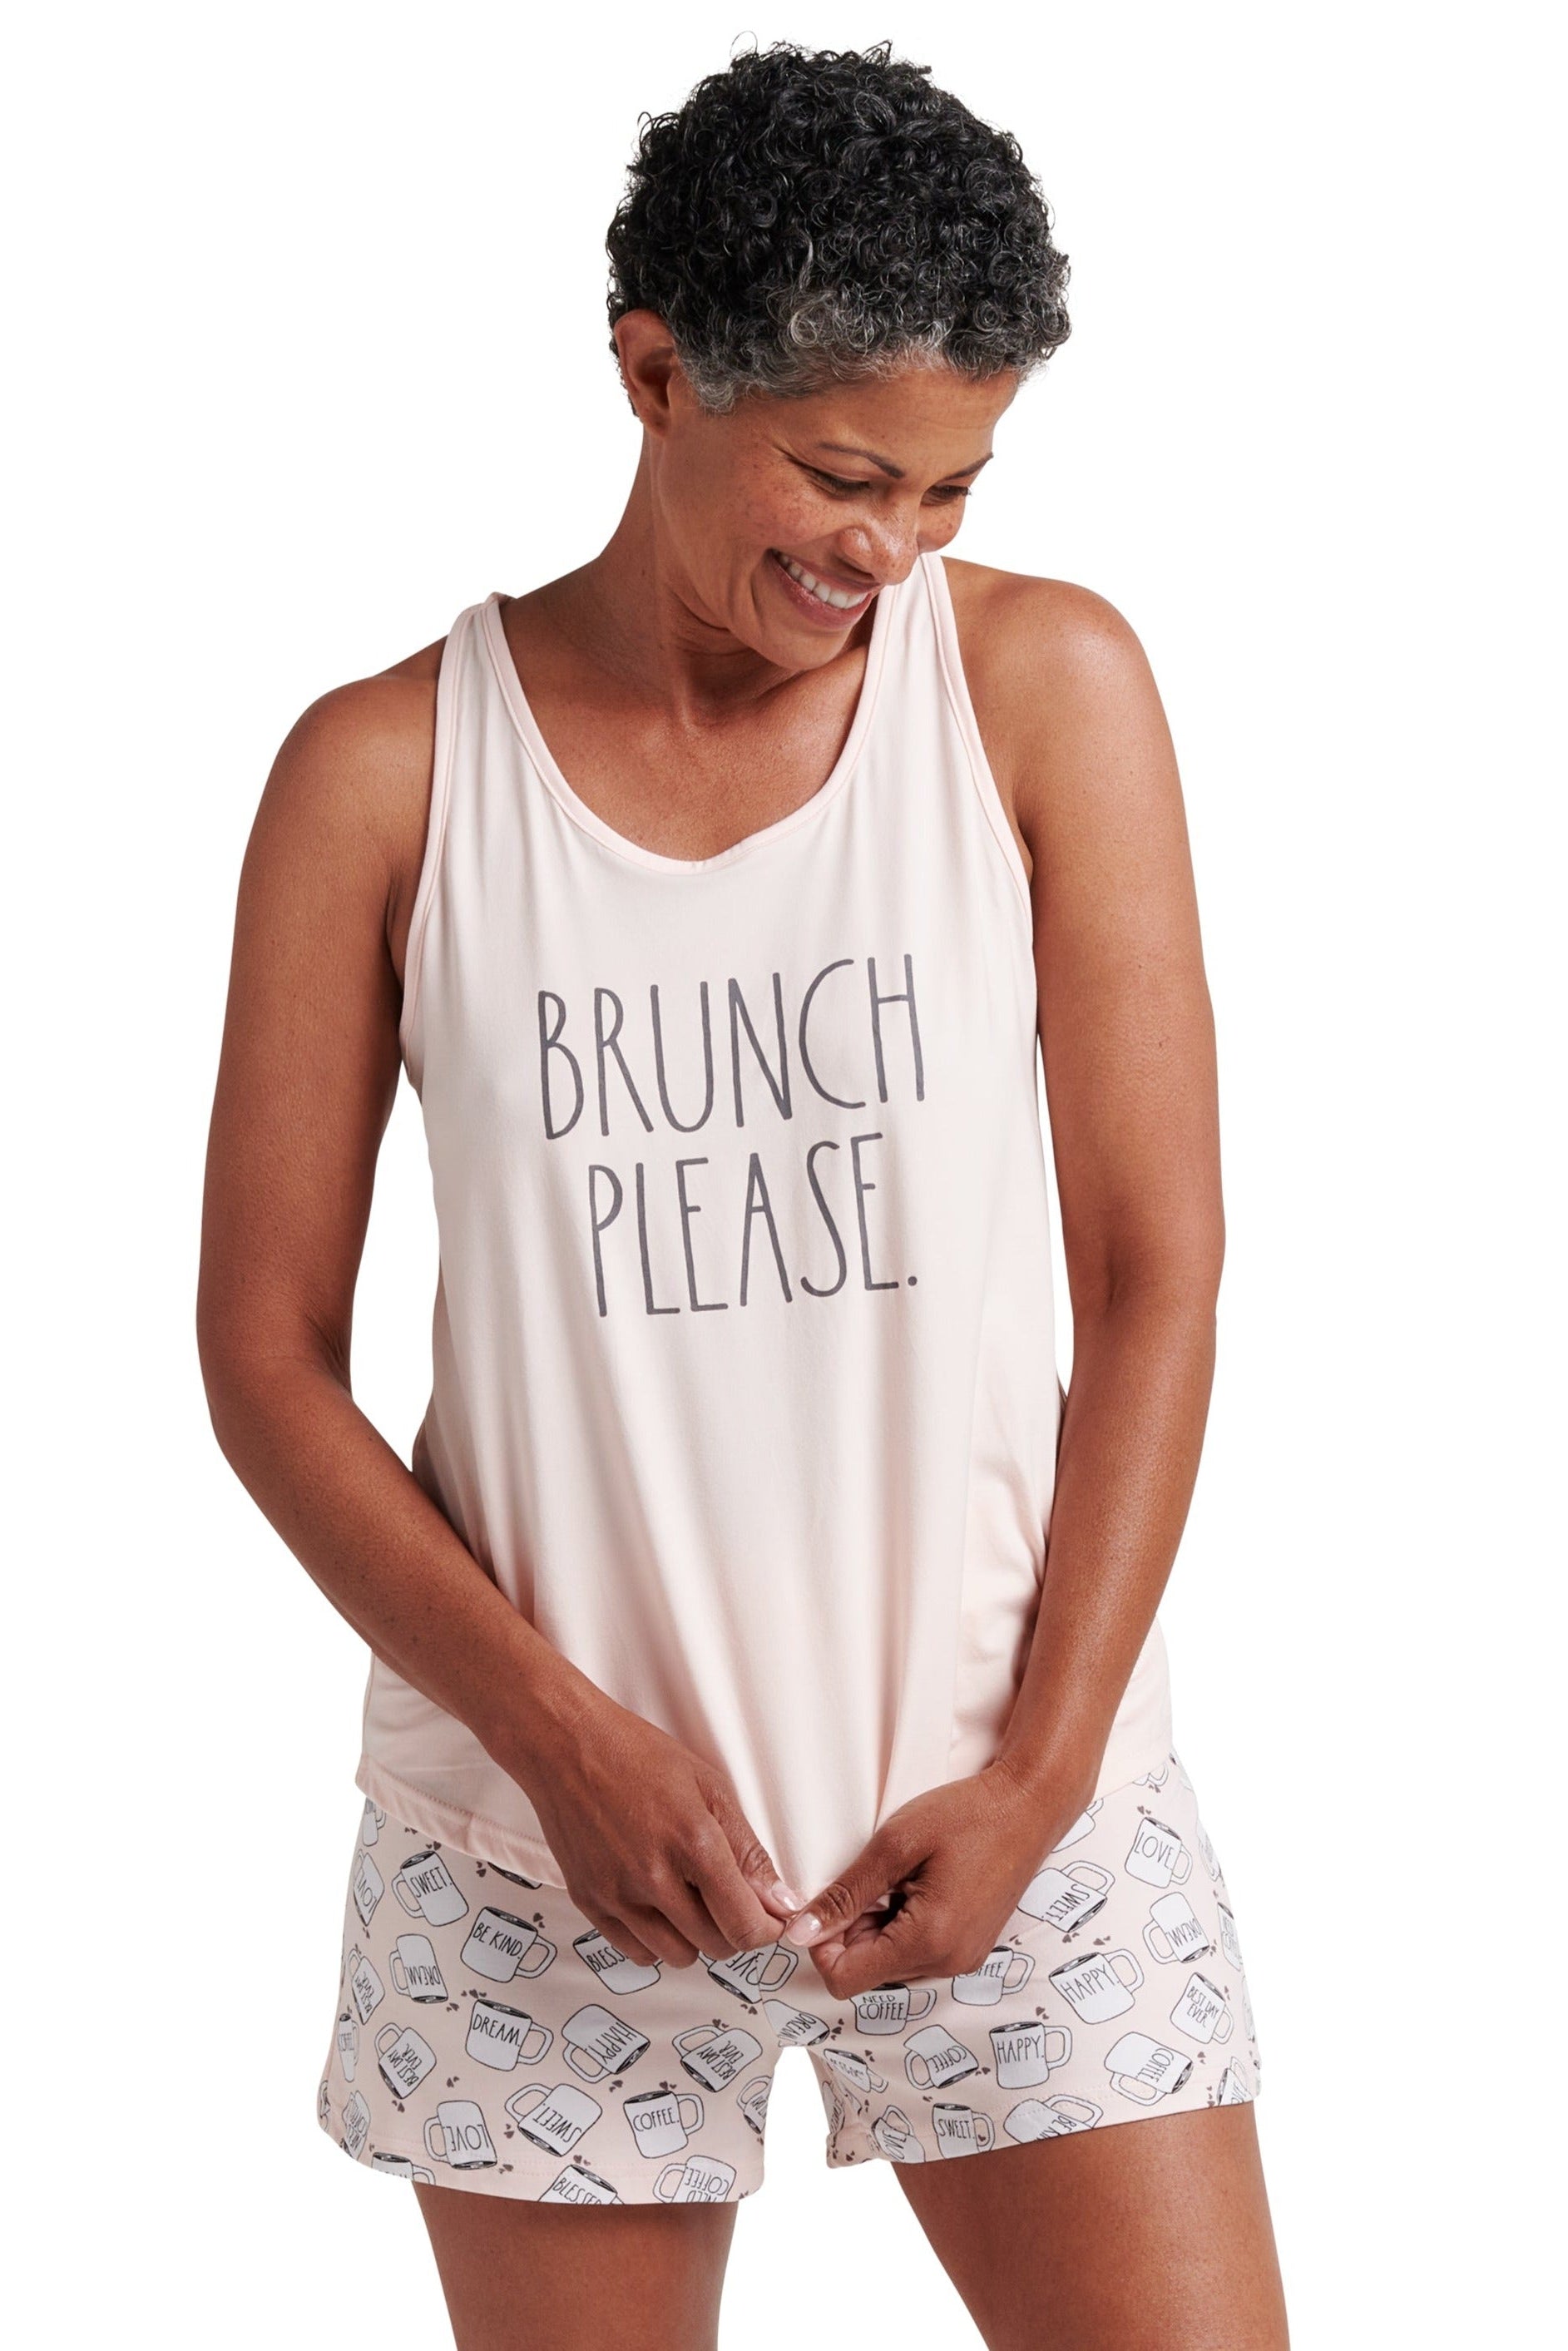 Women's "BRUNCH PLEASE" Racerback Cami and Drawstring Shorts Pajama Set - Rae Dunn Wear